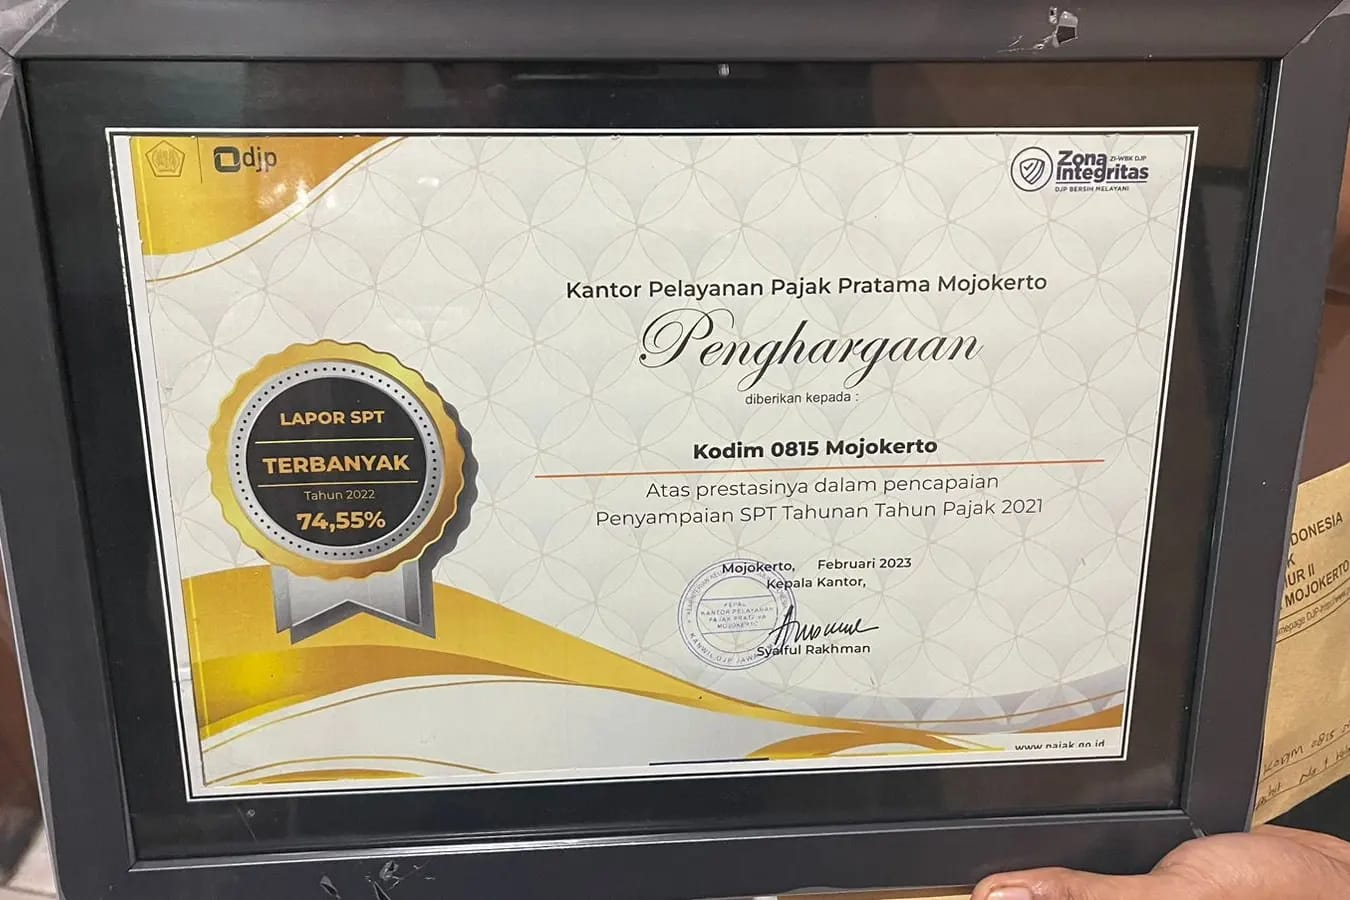 Lapor SPT Terbanyak, Kodim 0815/Mojokerto Terima Penghargaan KPP Pratama Mojokerto